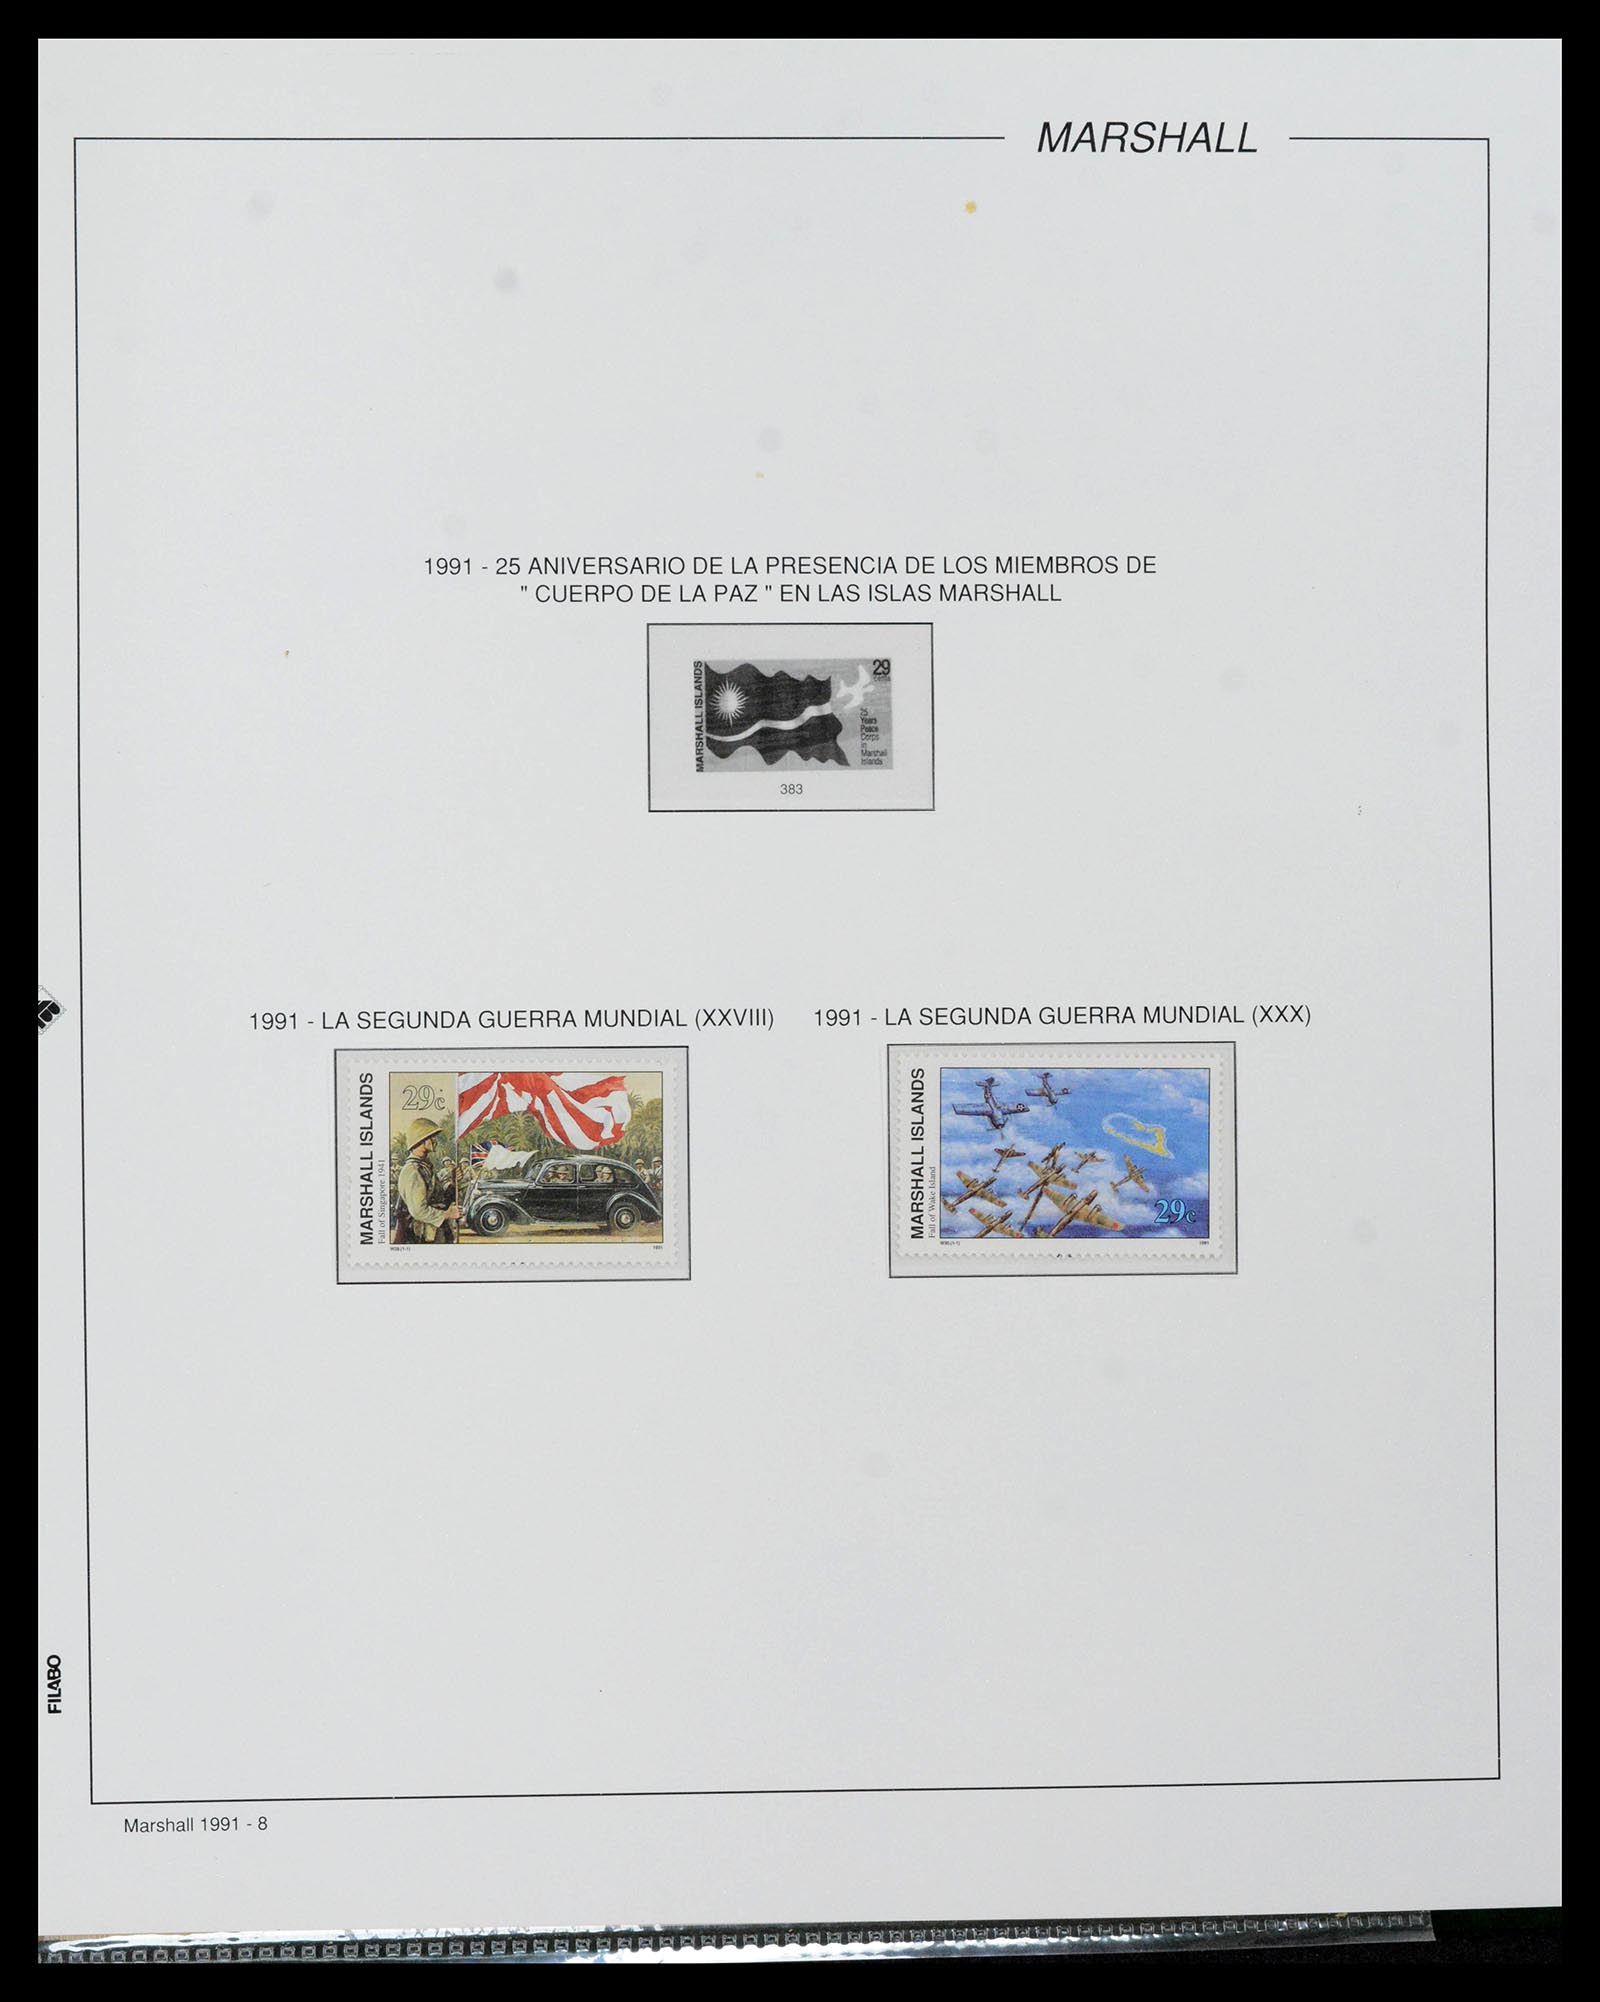 39222 0158 - Stamp collection 39222 Palau, Micronesia and Marshall islands 1980-1995.